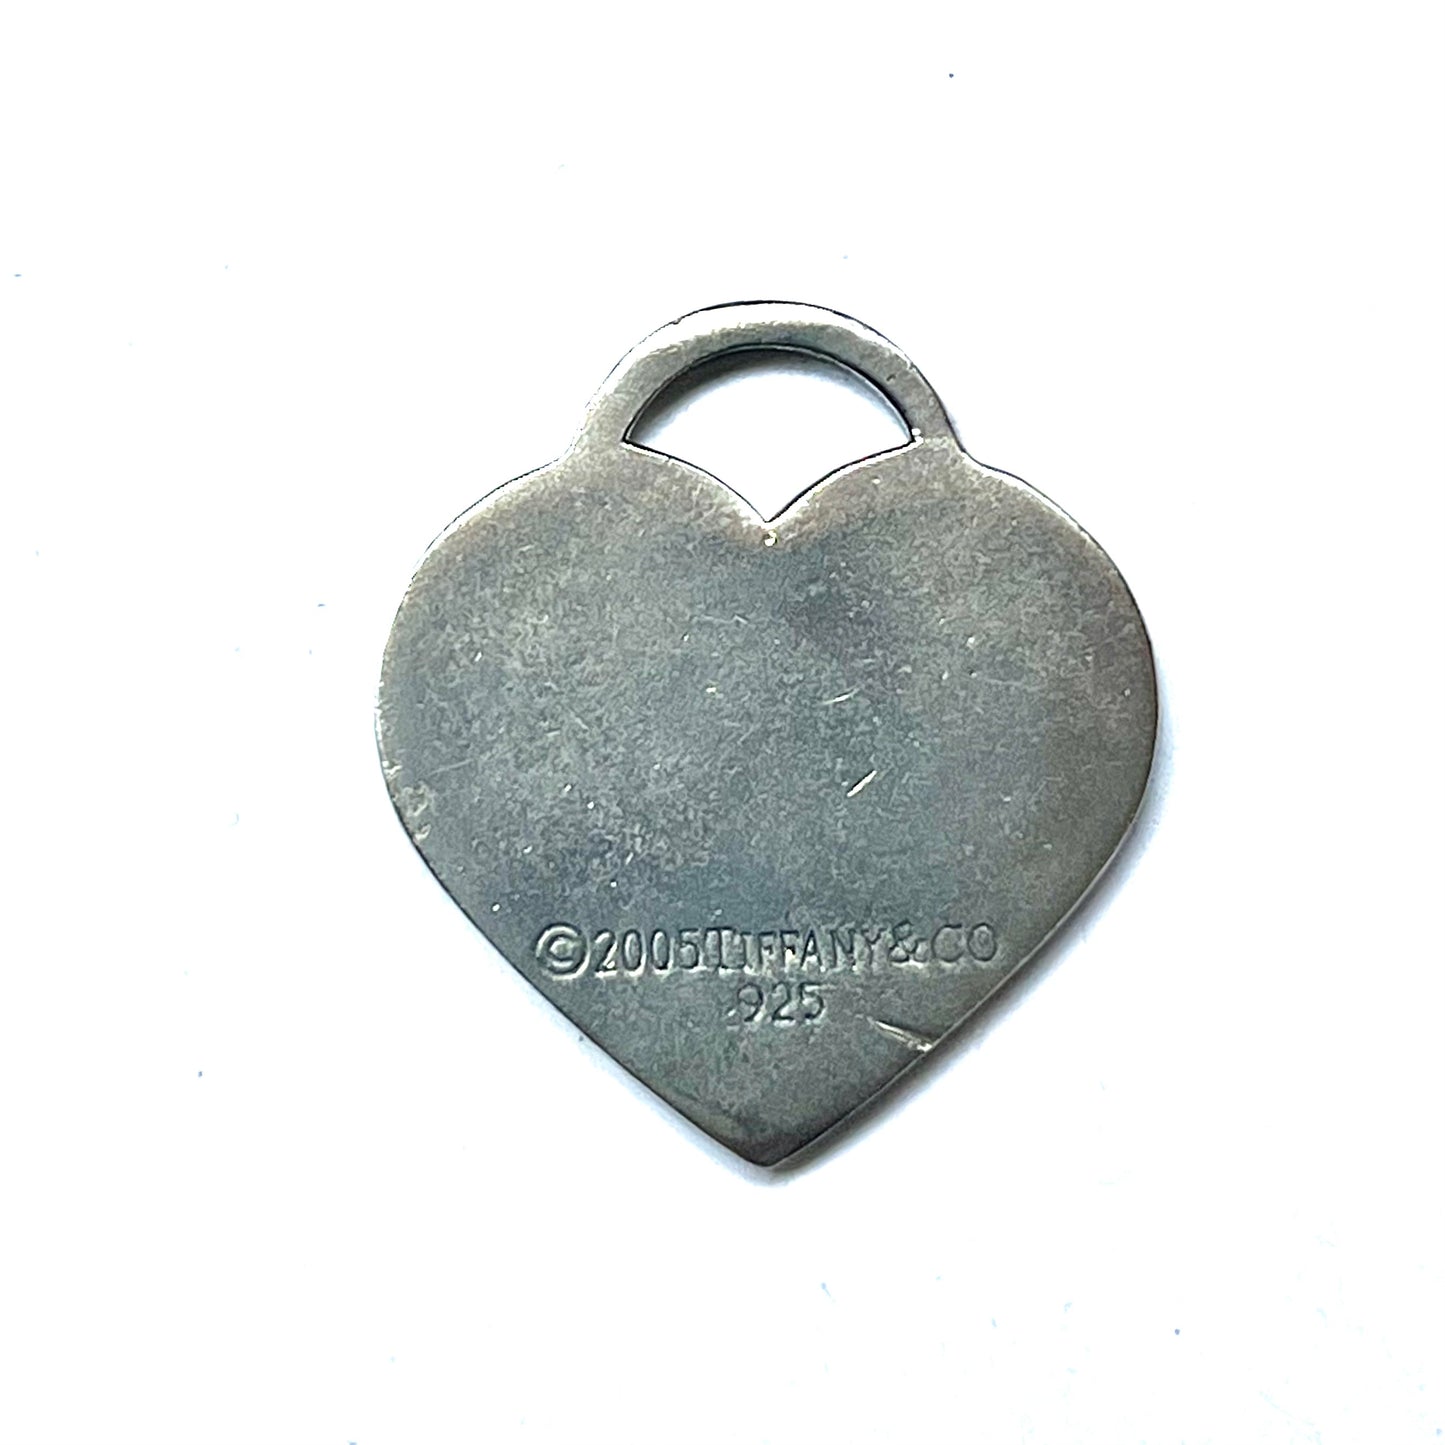 Vintage Tiffany & Co 1837 XL sterling silver heart charm pendant